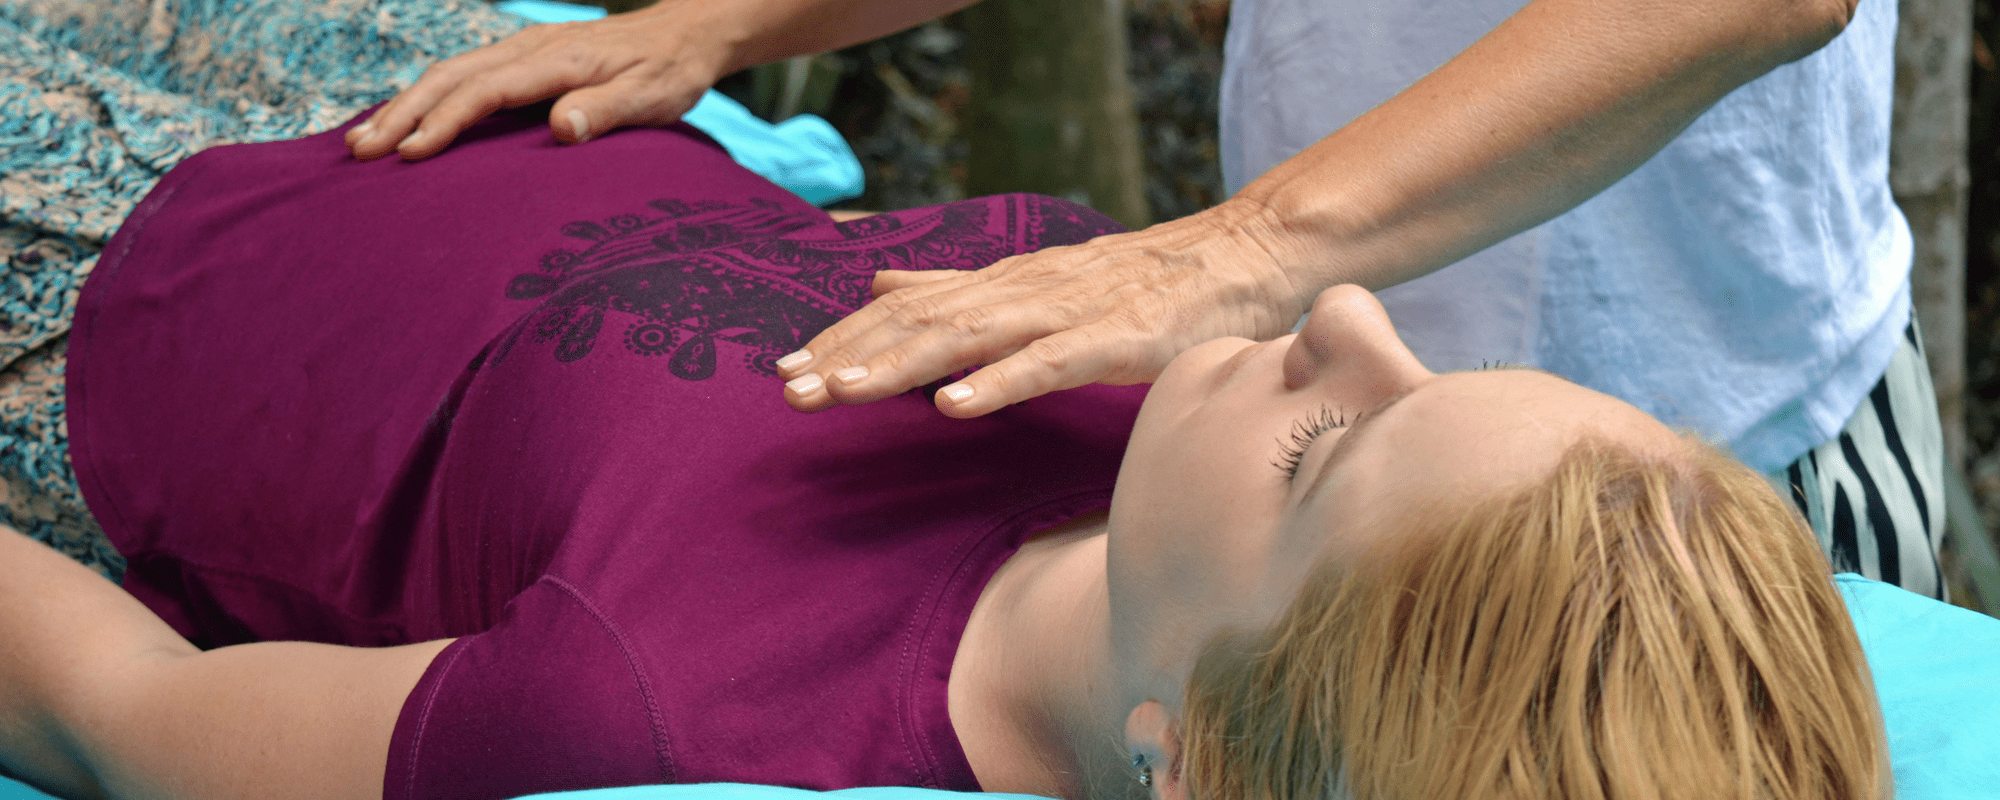 Reiki master Julie Heskins conducting a reiki treatment in Cairns